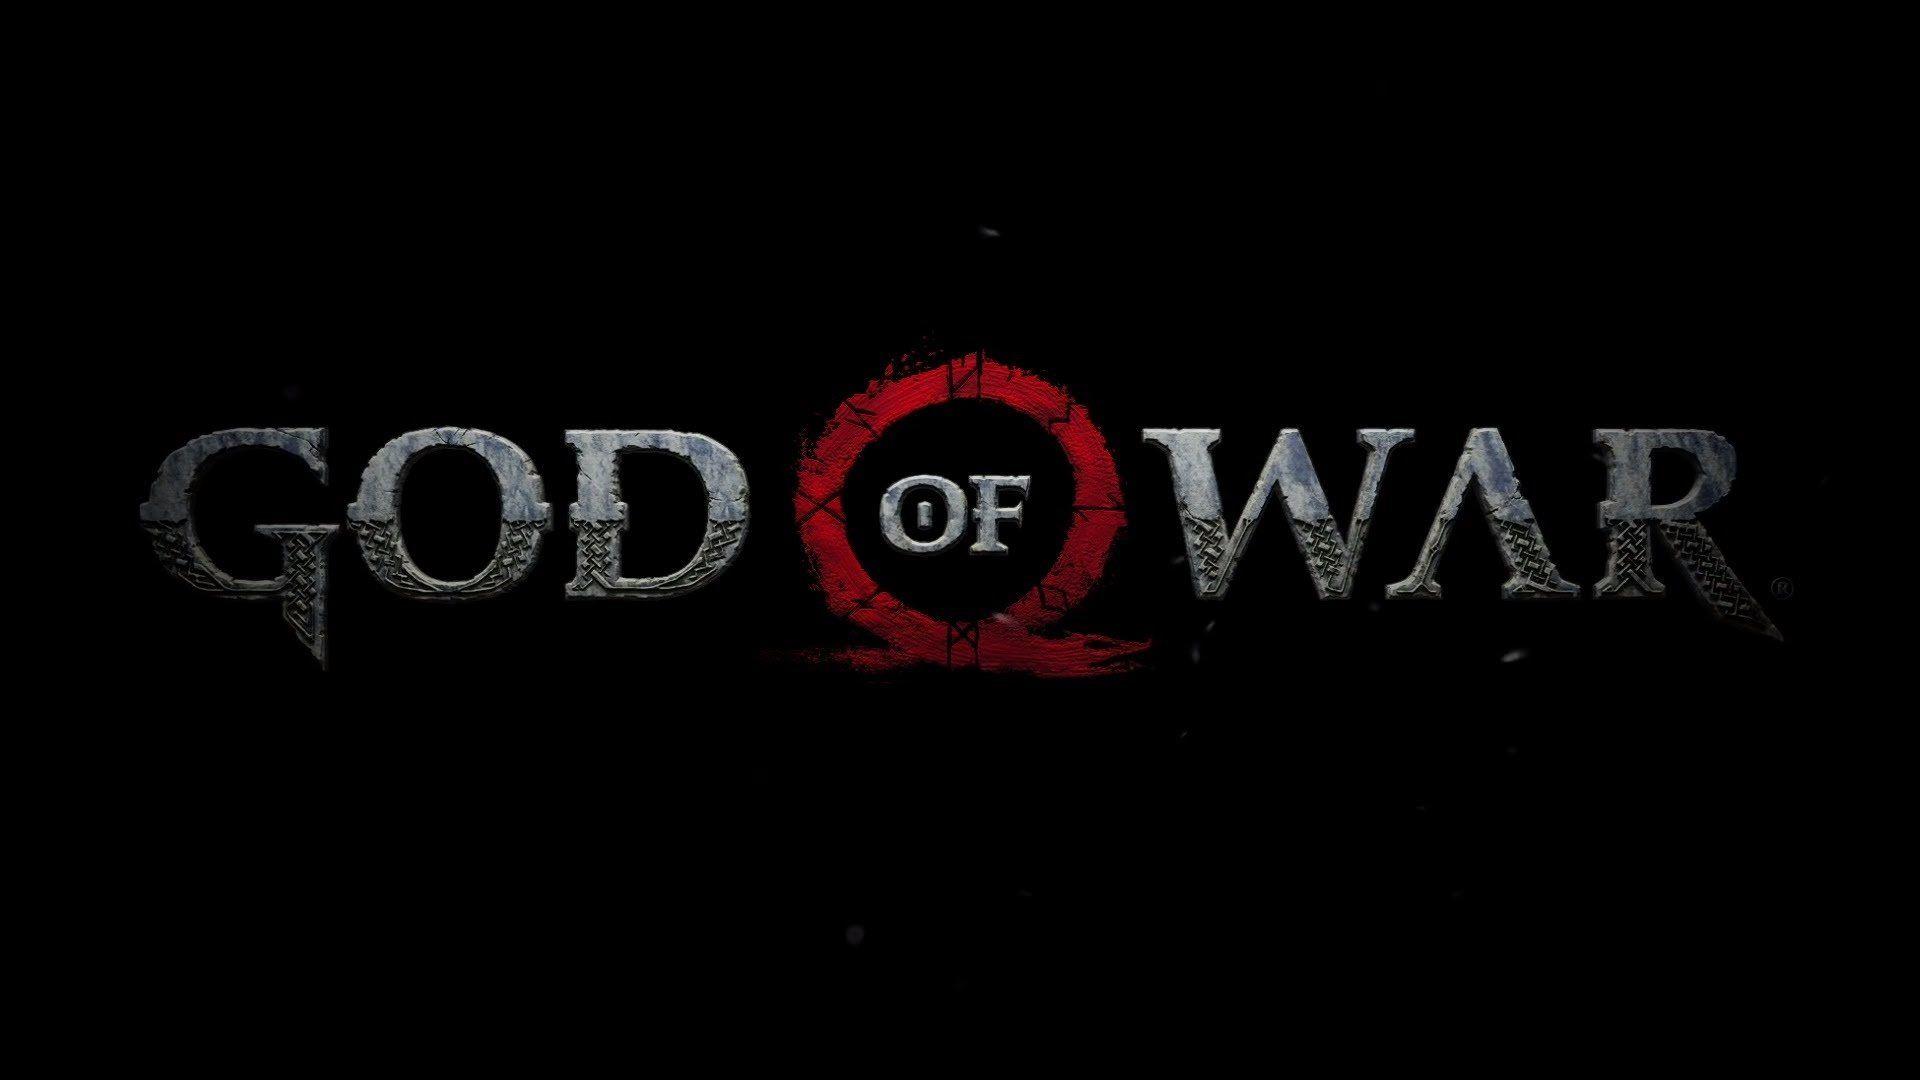 god of war omega symbol wallpaper